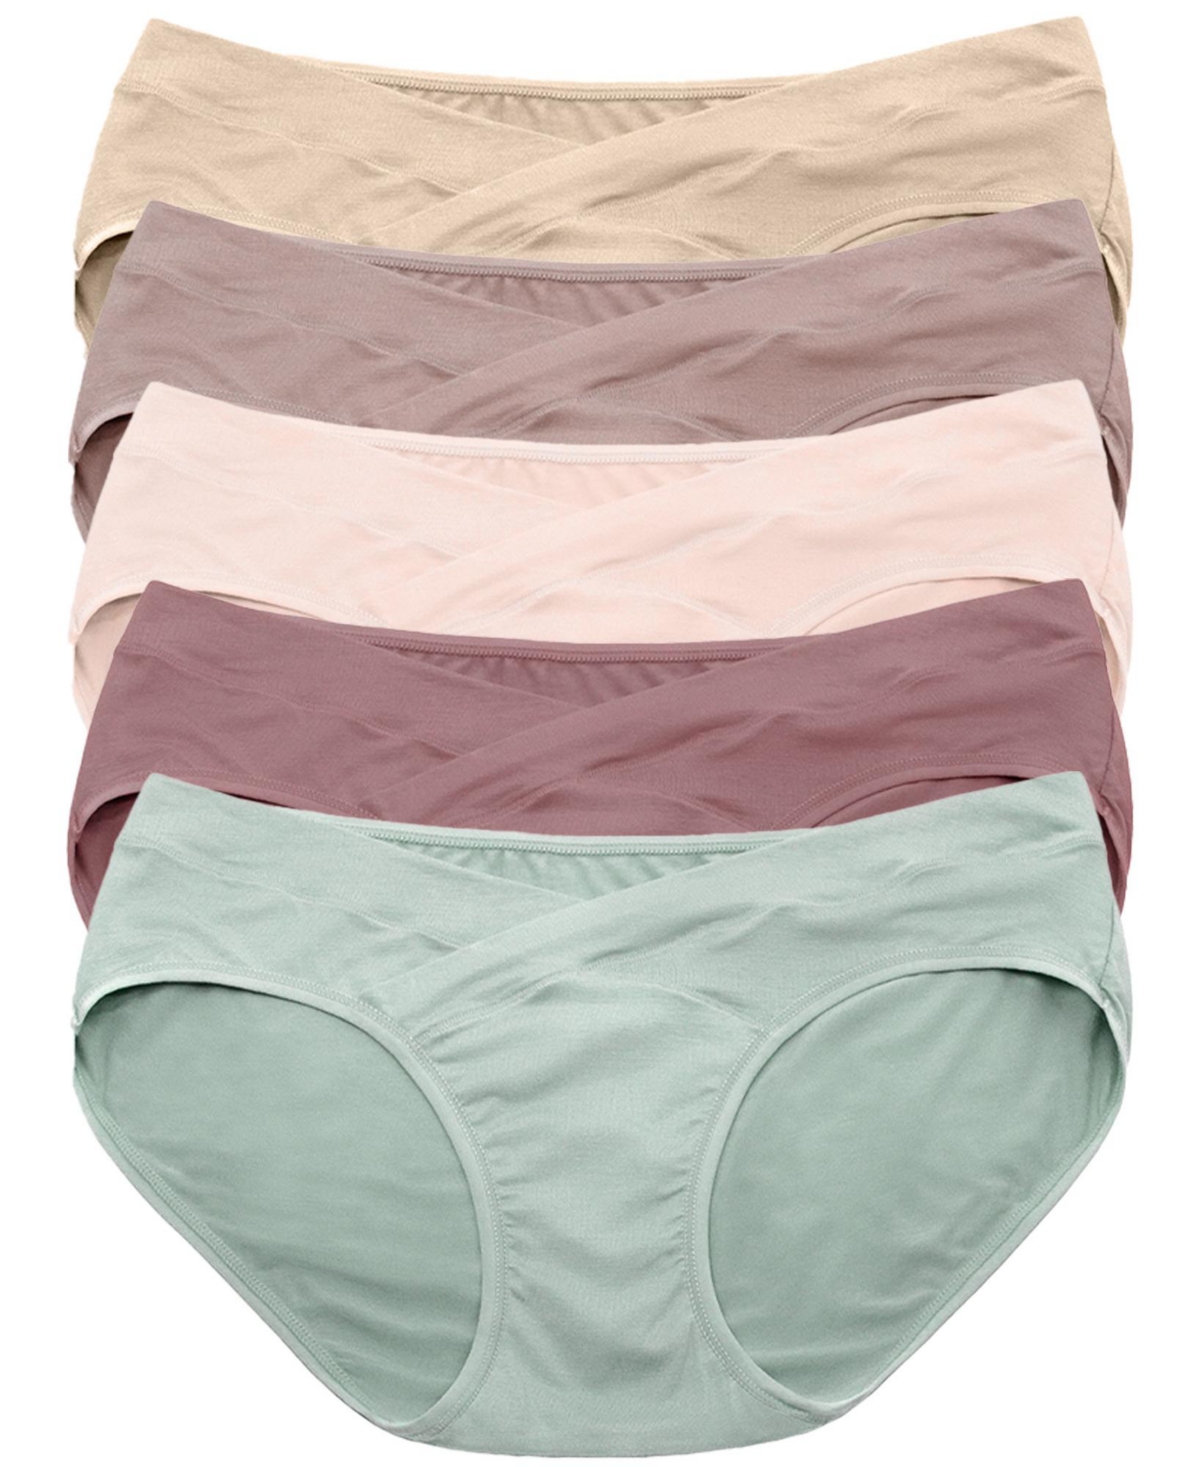 Maternity Under-the-Bump Bikini Underwear (5-Pack) - Assorted Neutrals